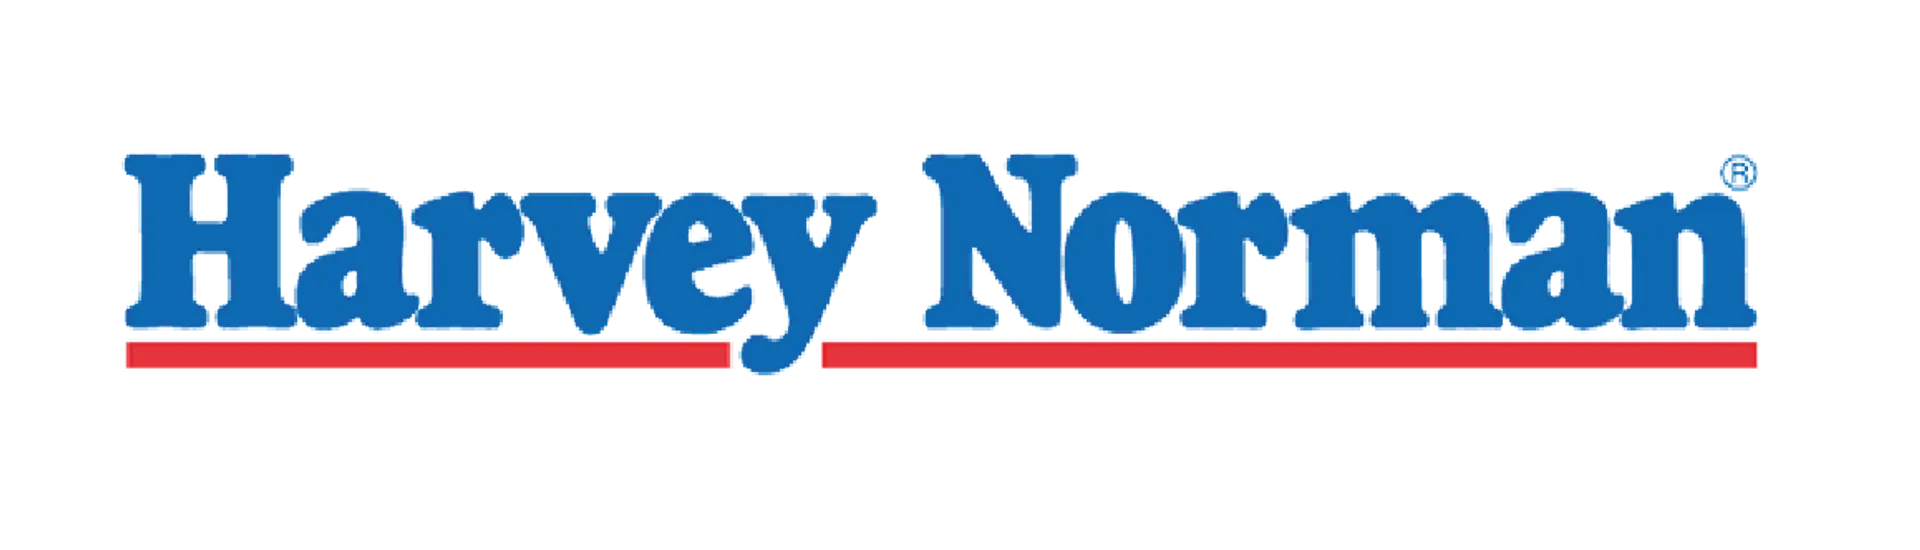 HARVEY NORMAN logo